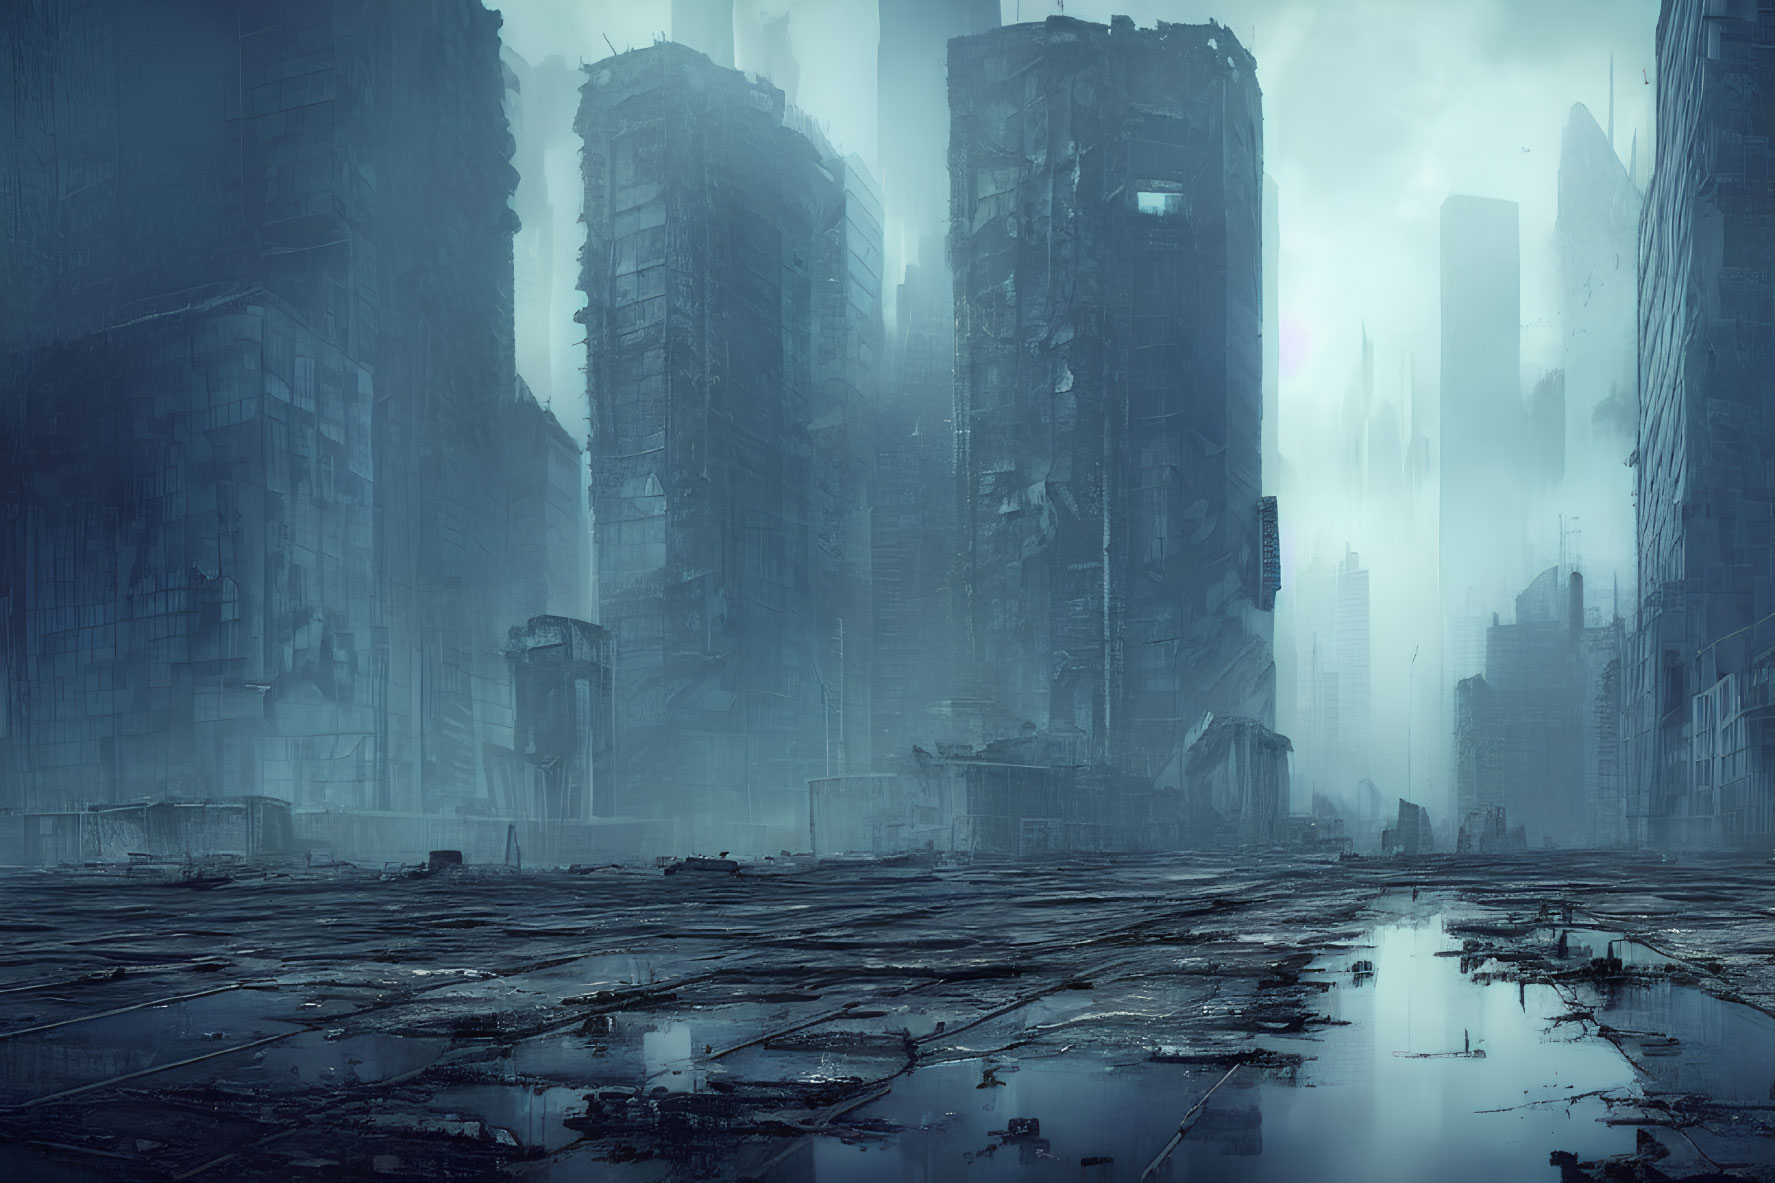 Desolate urban landscape with mist-shrouded skyscrapers